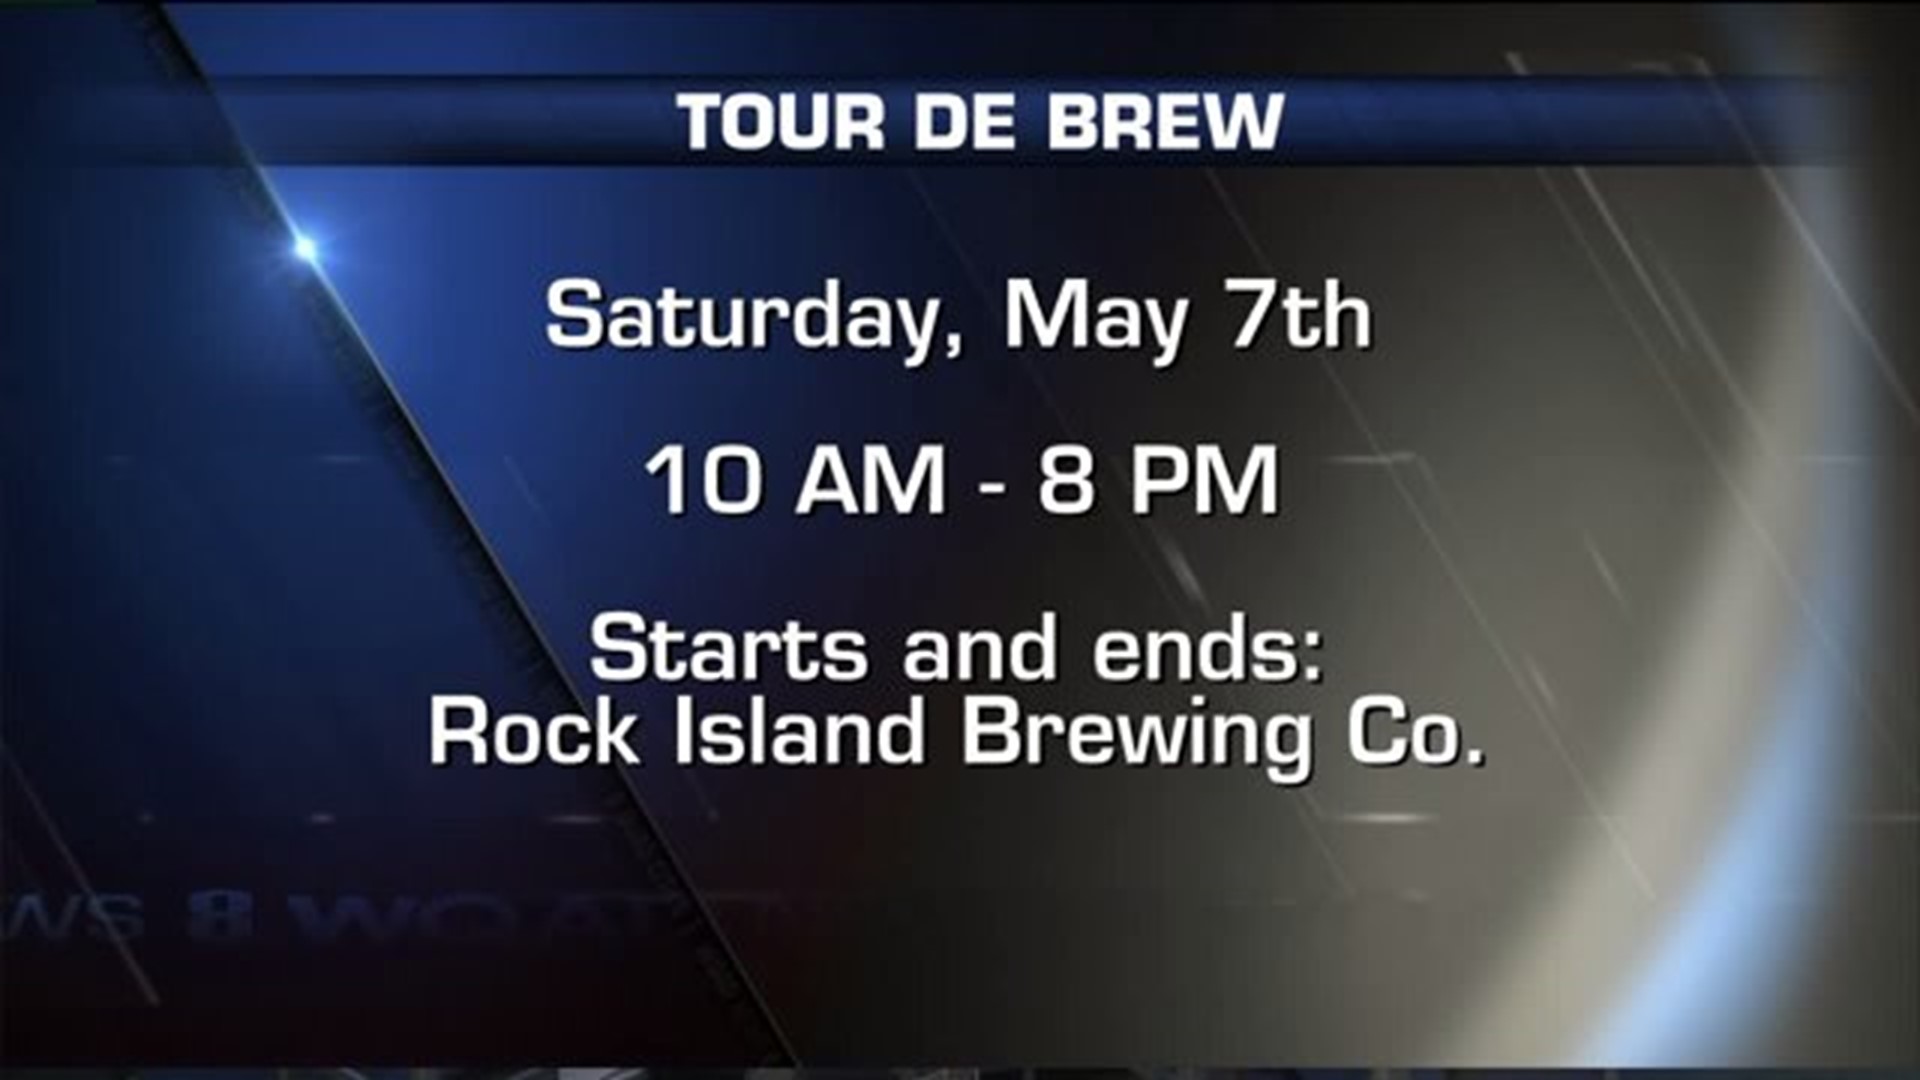 Tour de Brew is May 7